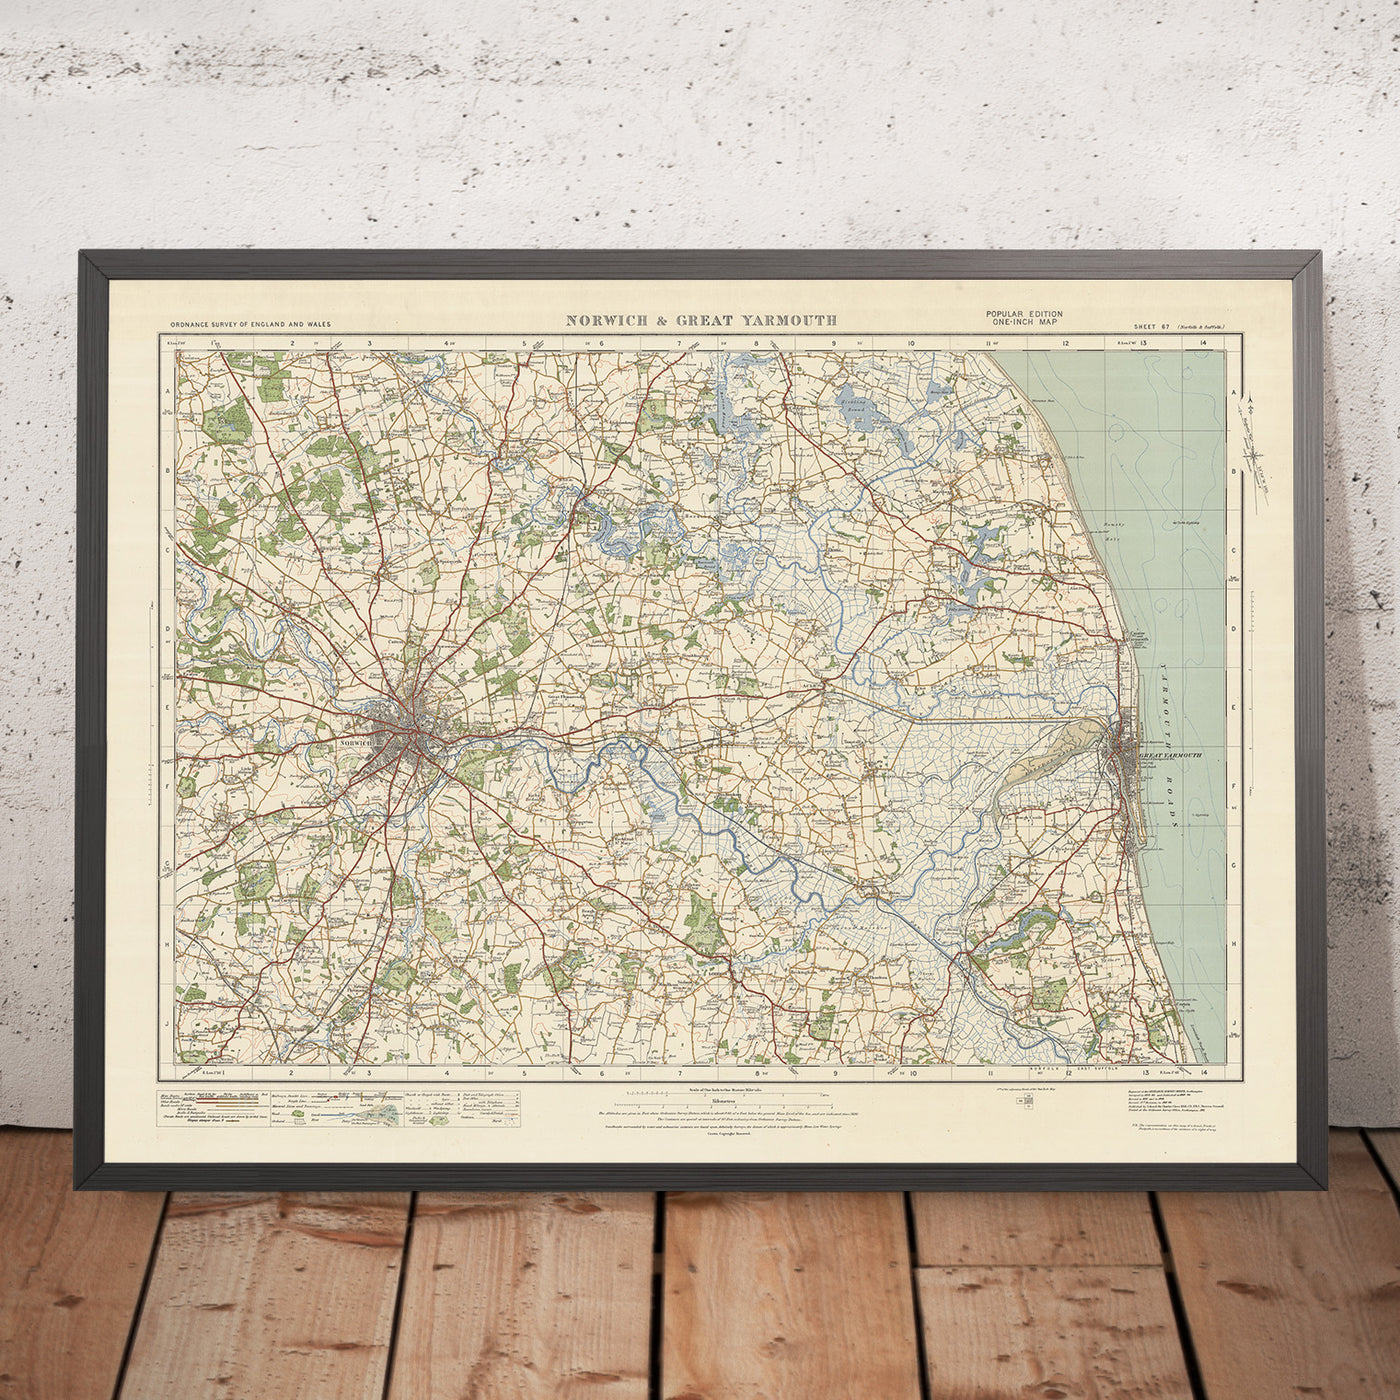 Old Ordnance Survey Map, Blatt 67 – Norwich und Great Yarmouth, 1925: Caister-on-Sea, Hethersett, Loddon, Acle, The Broads